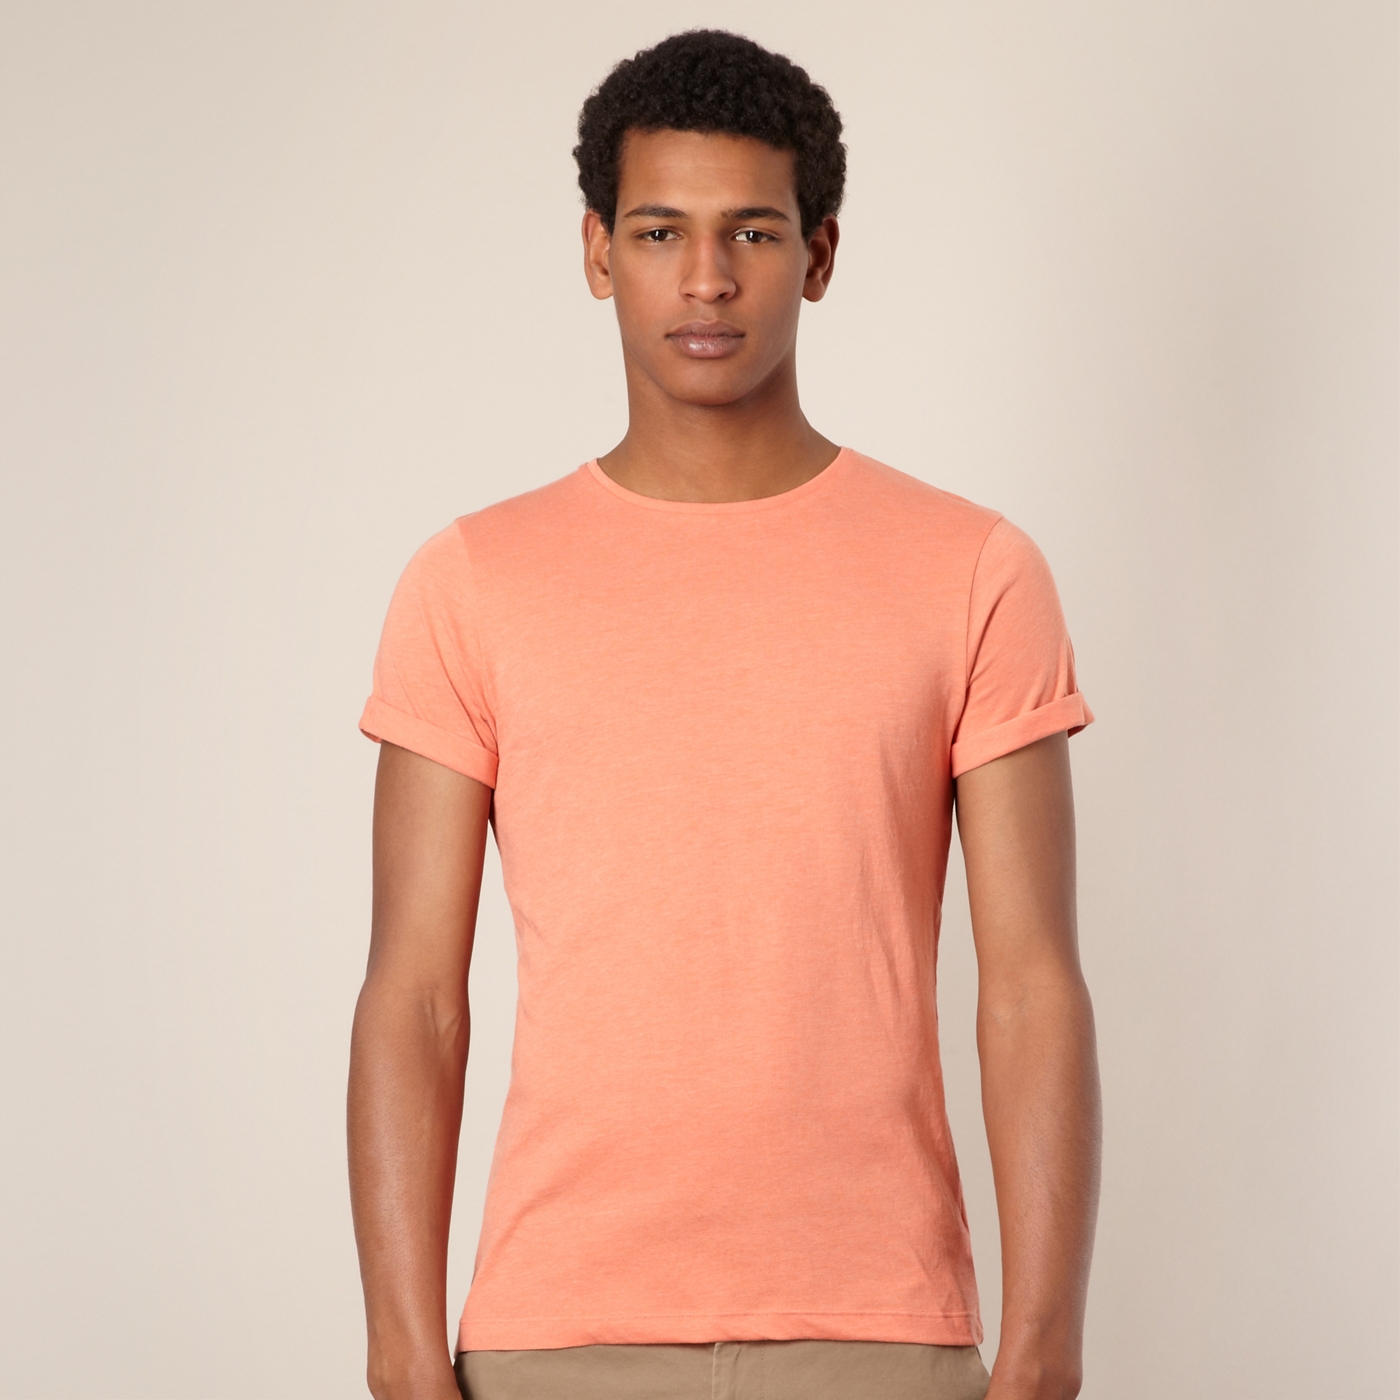 Red Herring Orange roll sleeve t shirt